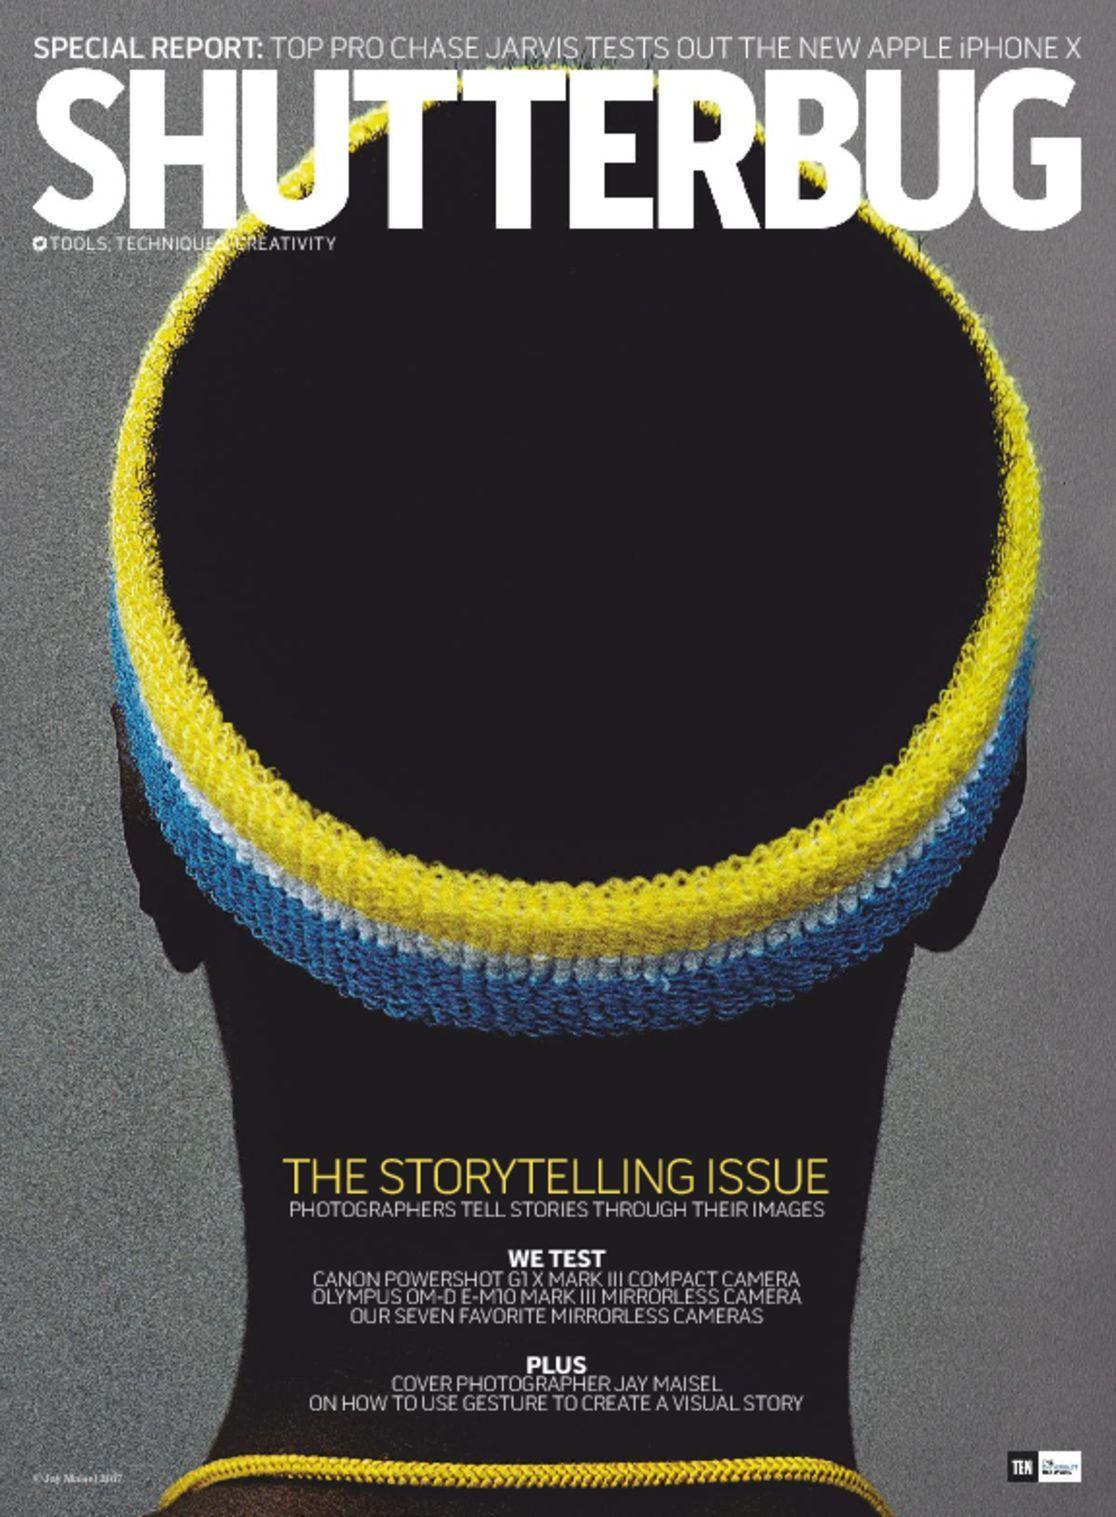 shutterbug magazine customer service